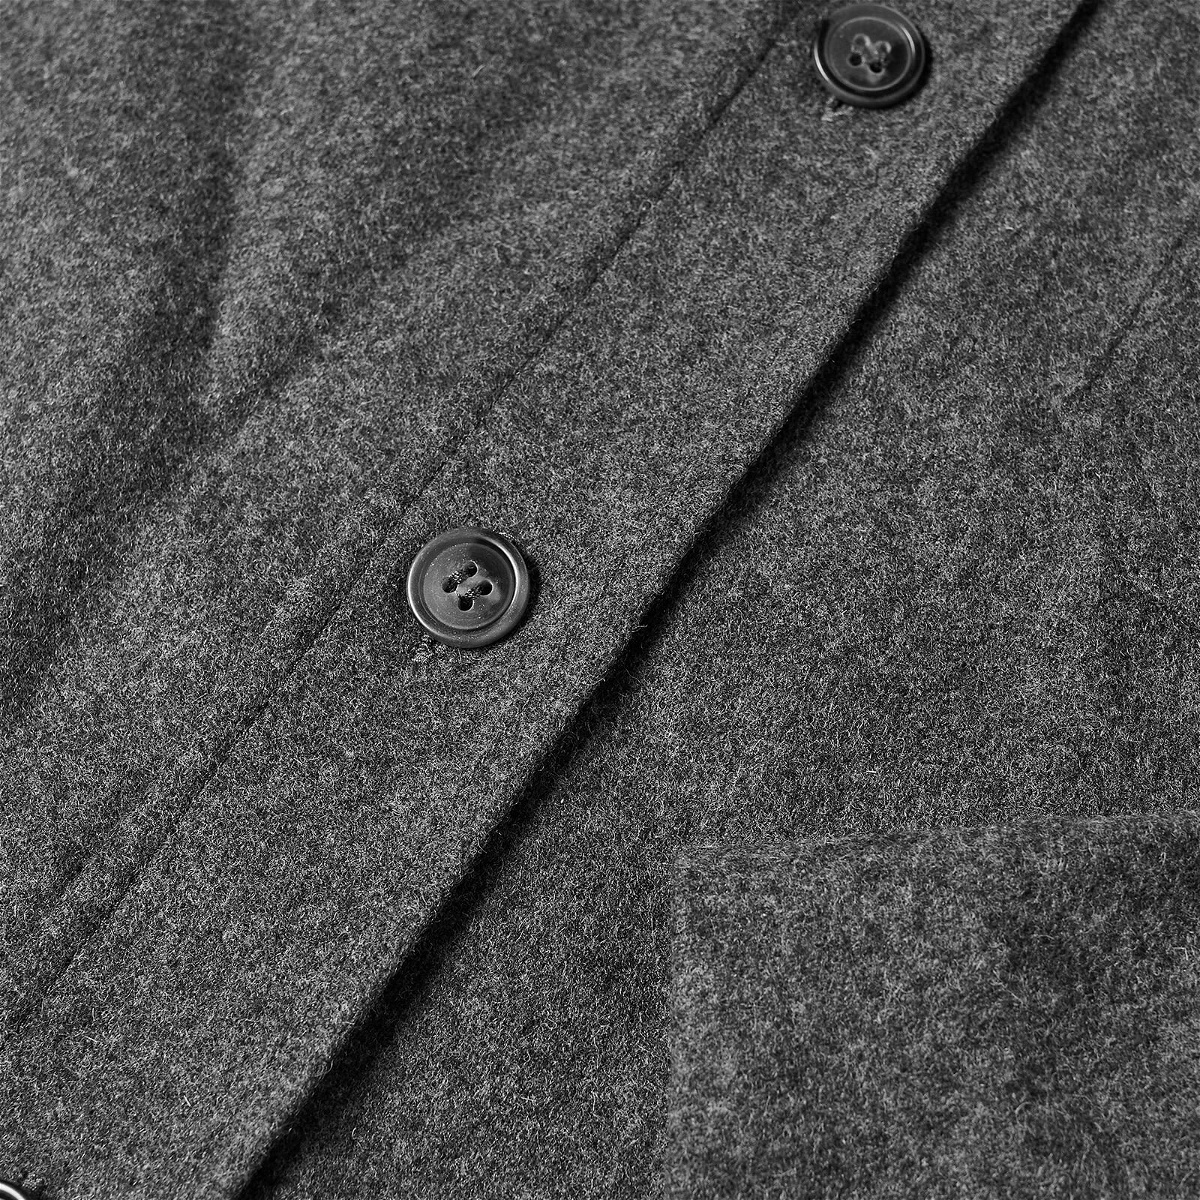 A.P.C. Men's Jasper Wool Overshirt in Heathered Anthracite